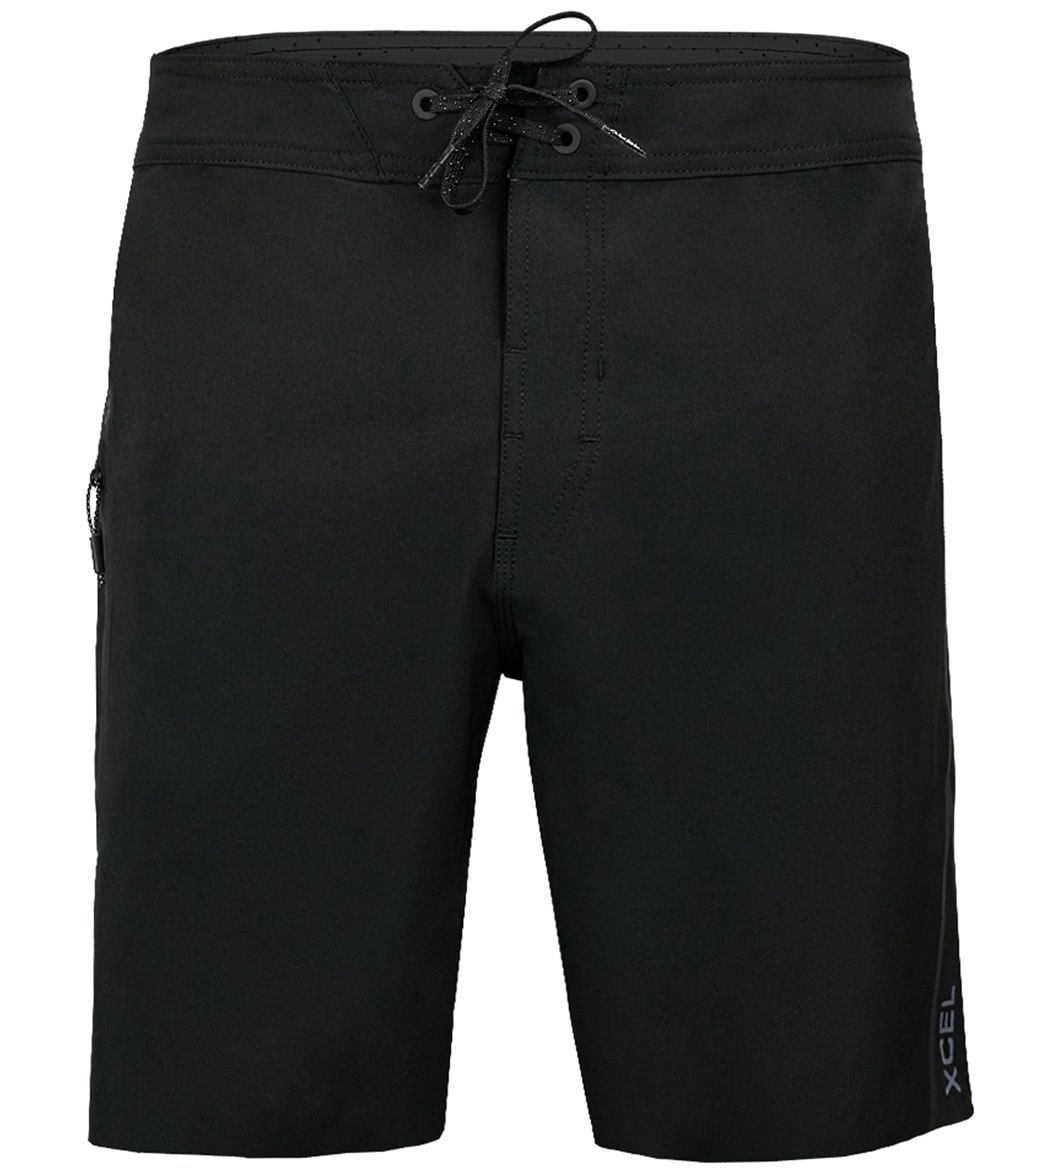 Xcel Men's Drylock 18.5 Boardshorts - Black 29 - Swimoutlet.com